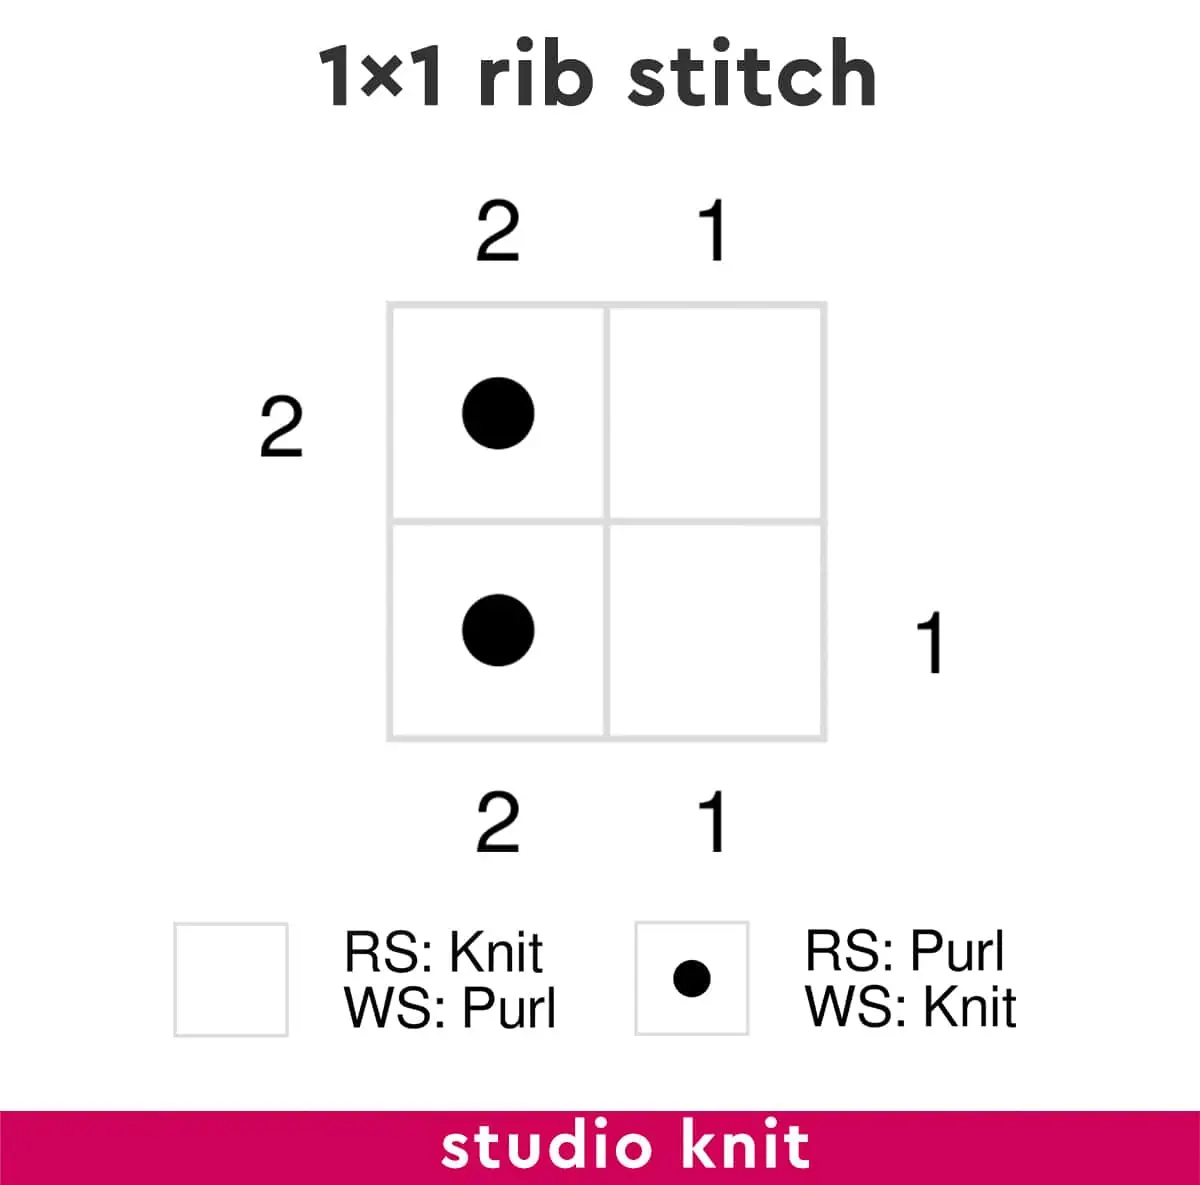 Knitting chart diagram of the 1x1 Rib Stitch by Studio Knit.